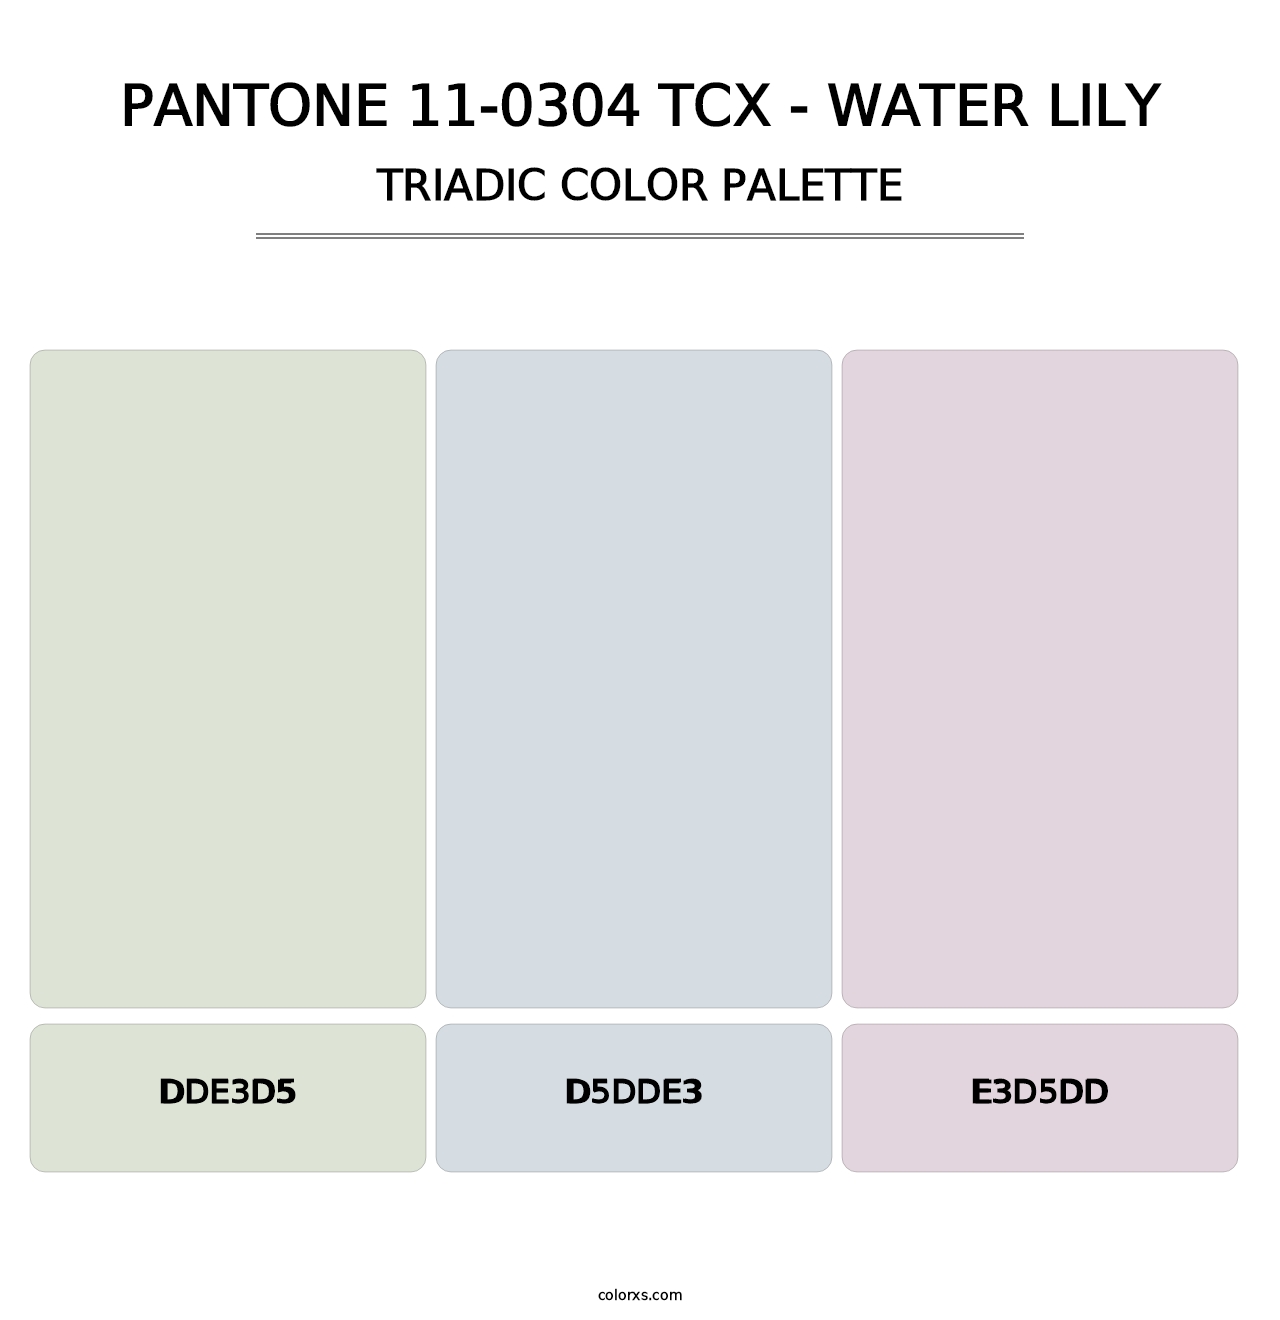 PANTONE 11-0304 TCX - Water Lily - Triadic Color Palette